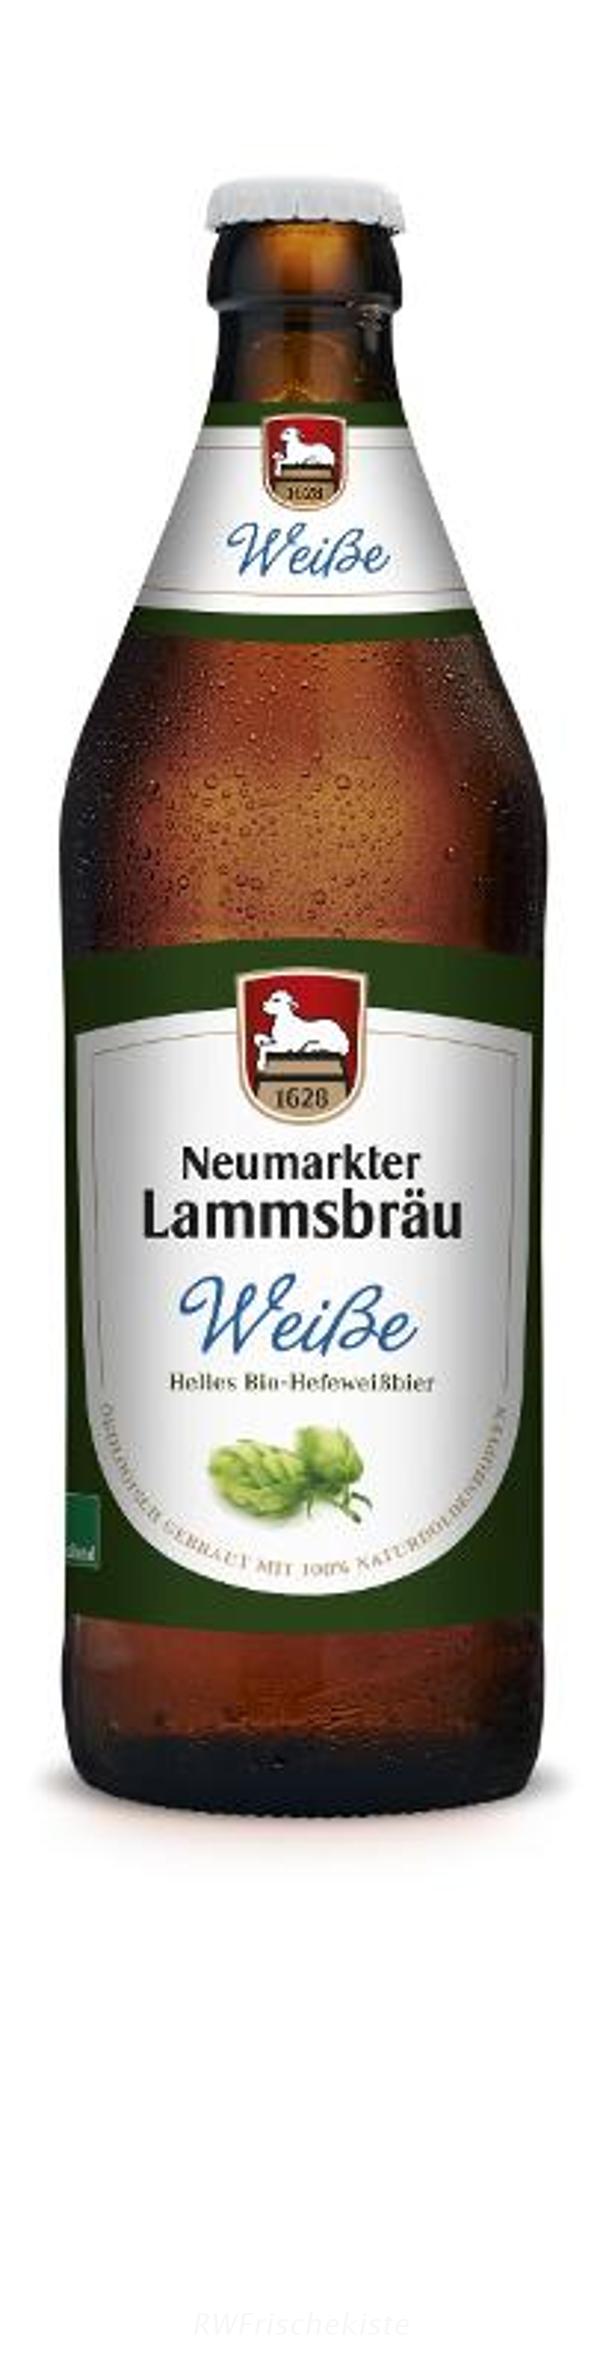 Produktfoto zu Lammsbräu Weisse (helles Hefe) Flasche